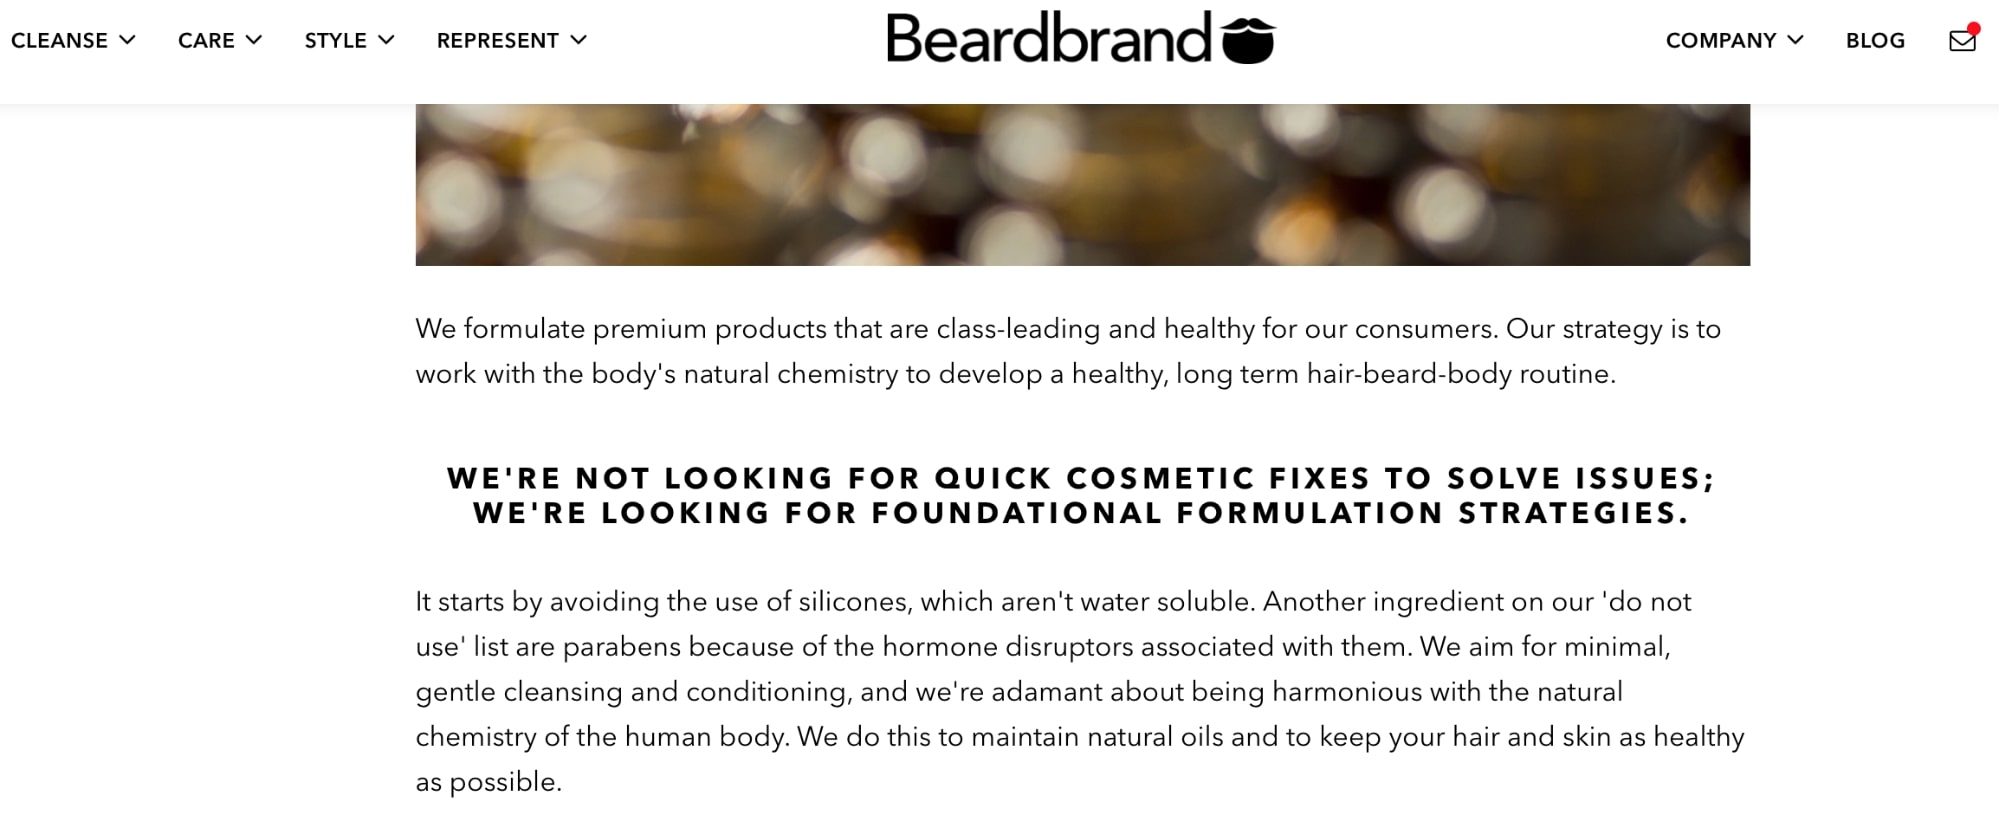 beardbrand unique selling proposition